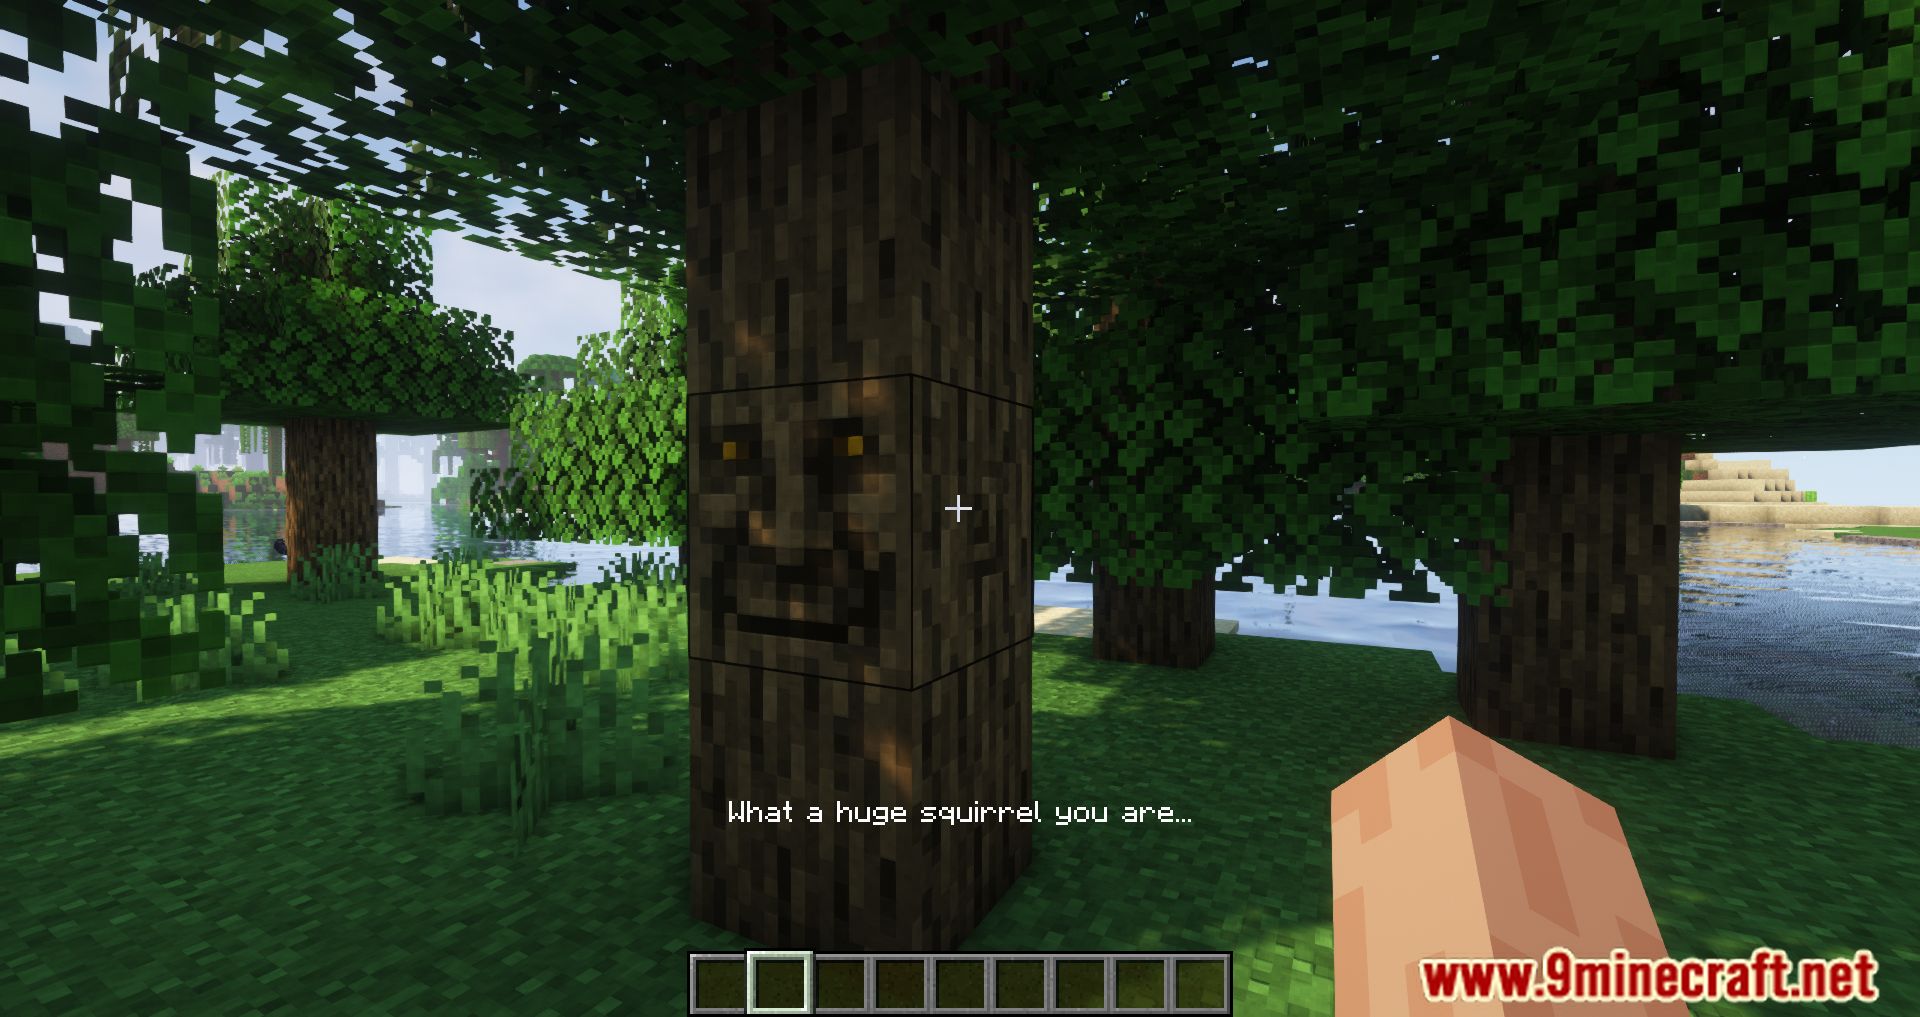 wise mystical tree (with bushy leaves) : r/Minecraftbuilds